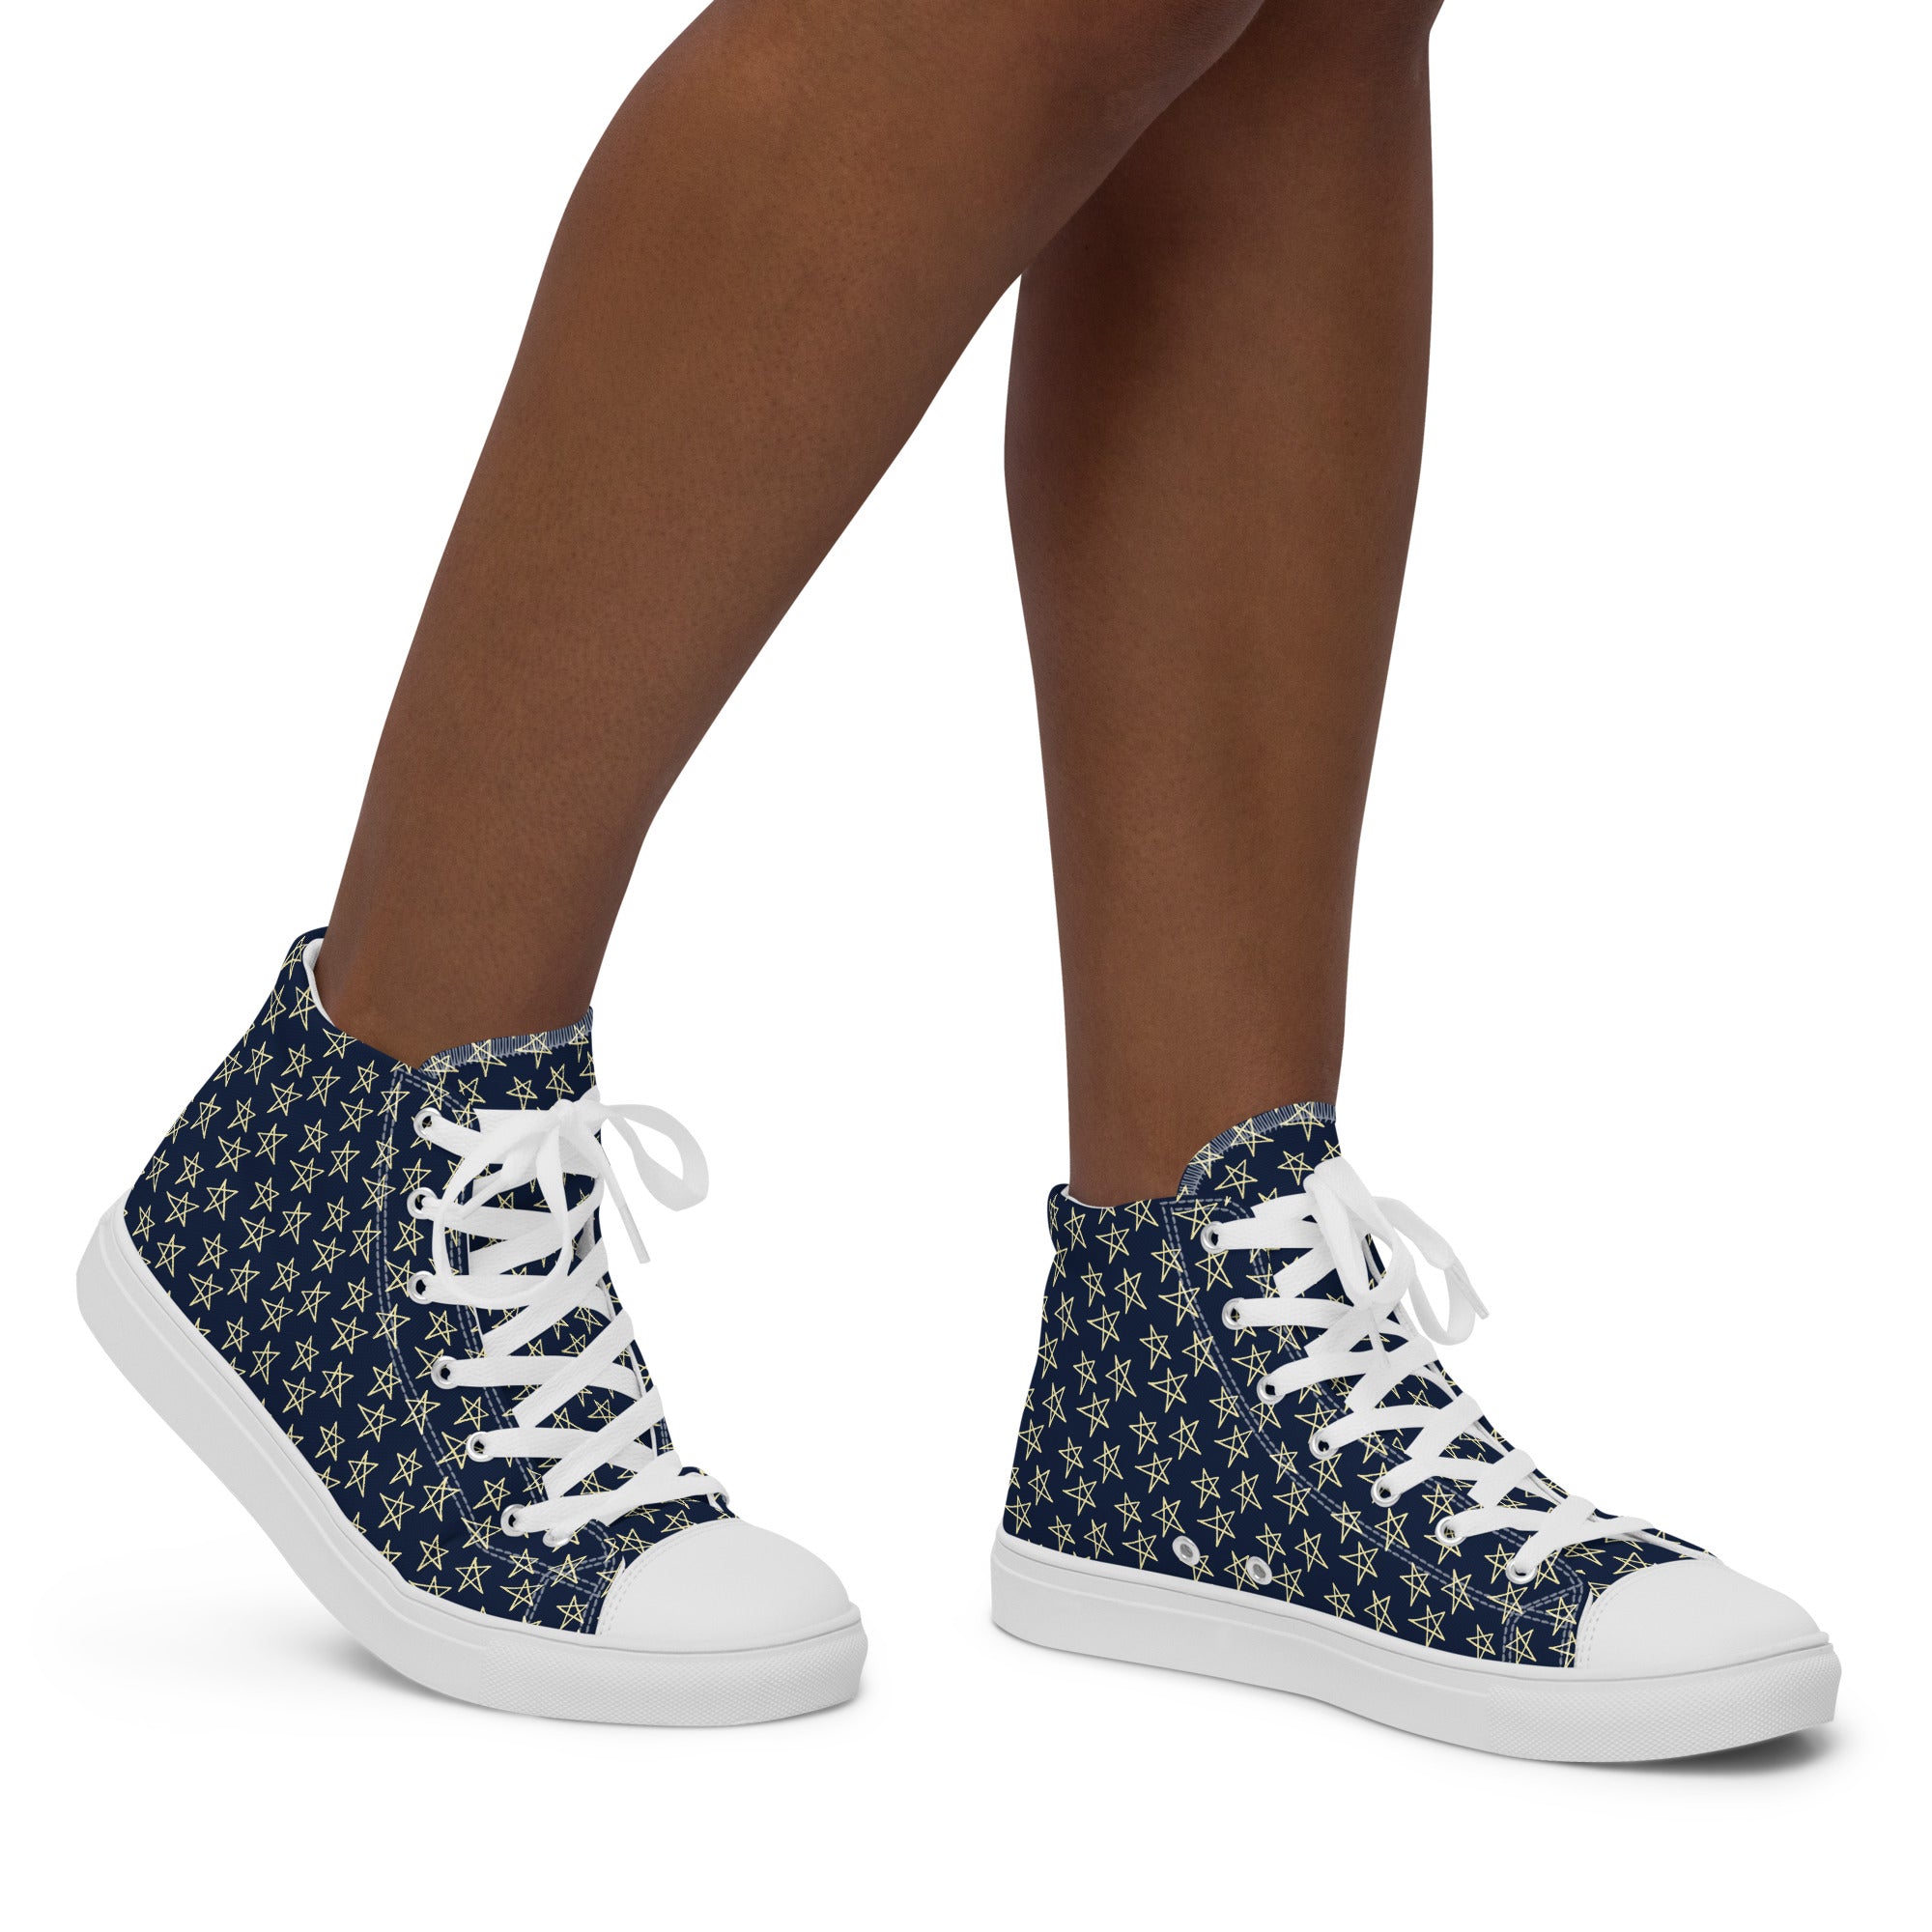 Chitelli's Starry Night Women's High Top Sneakers